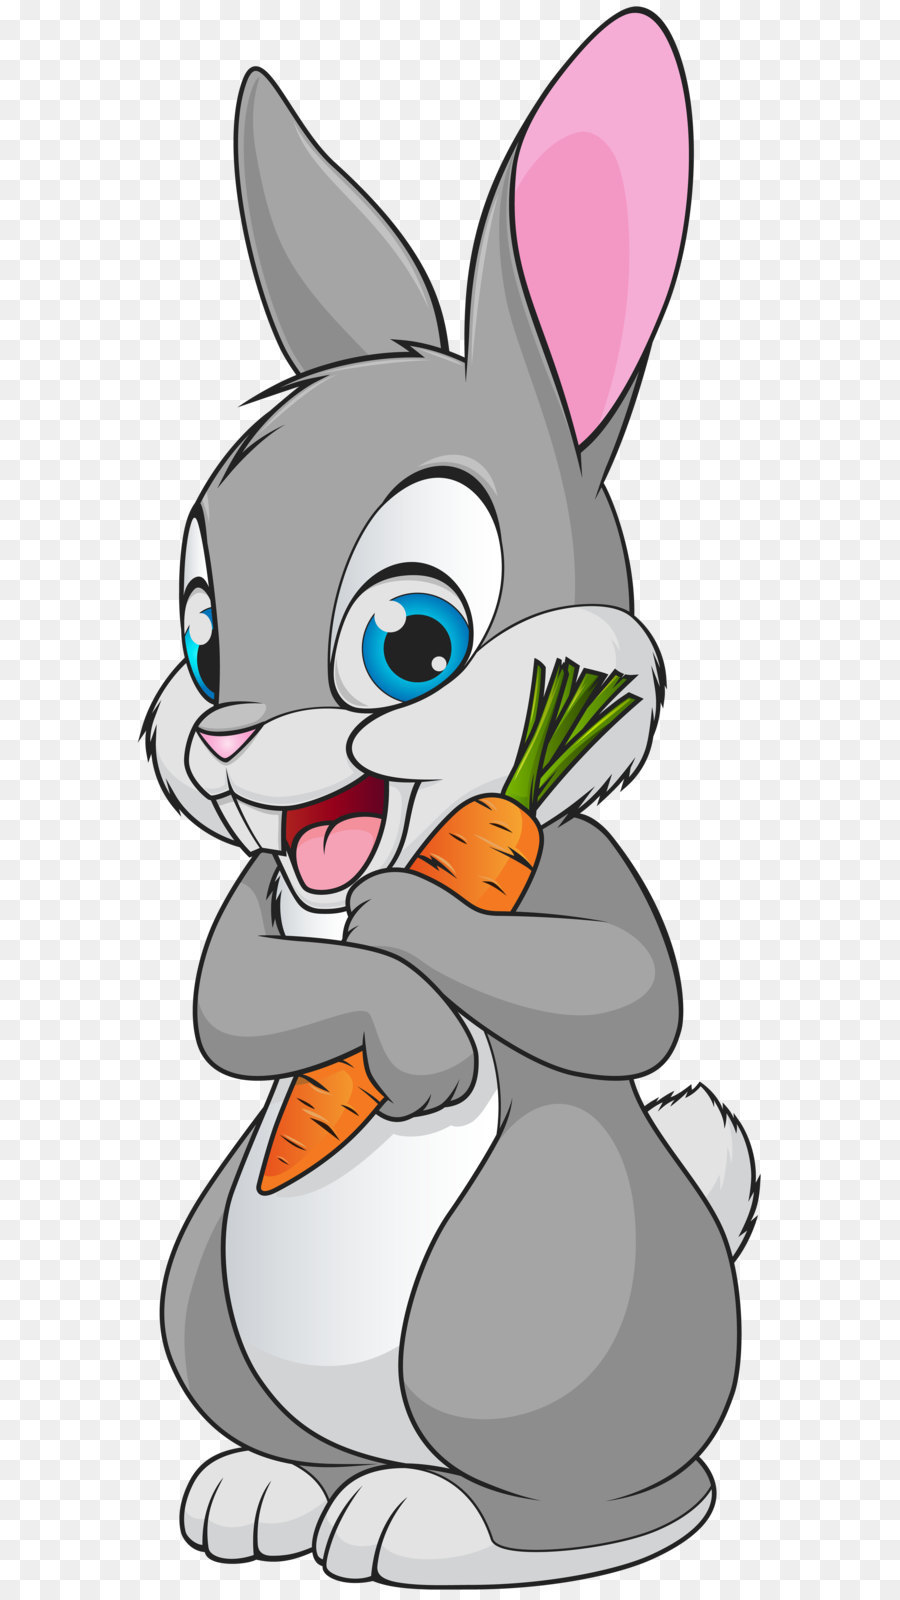 Bugs Bunny Rabbit Cartoon Clip art - Cute Bunny Cartoon Transparent Clip Art Image png download - 3259*8000 - Free Transparent Bugs Bunny png Download.